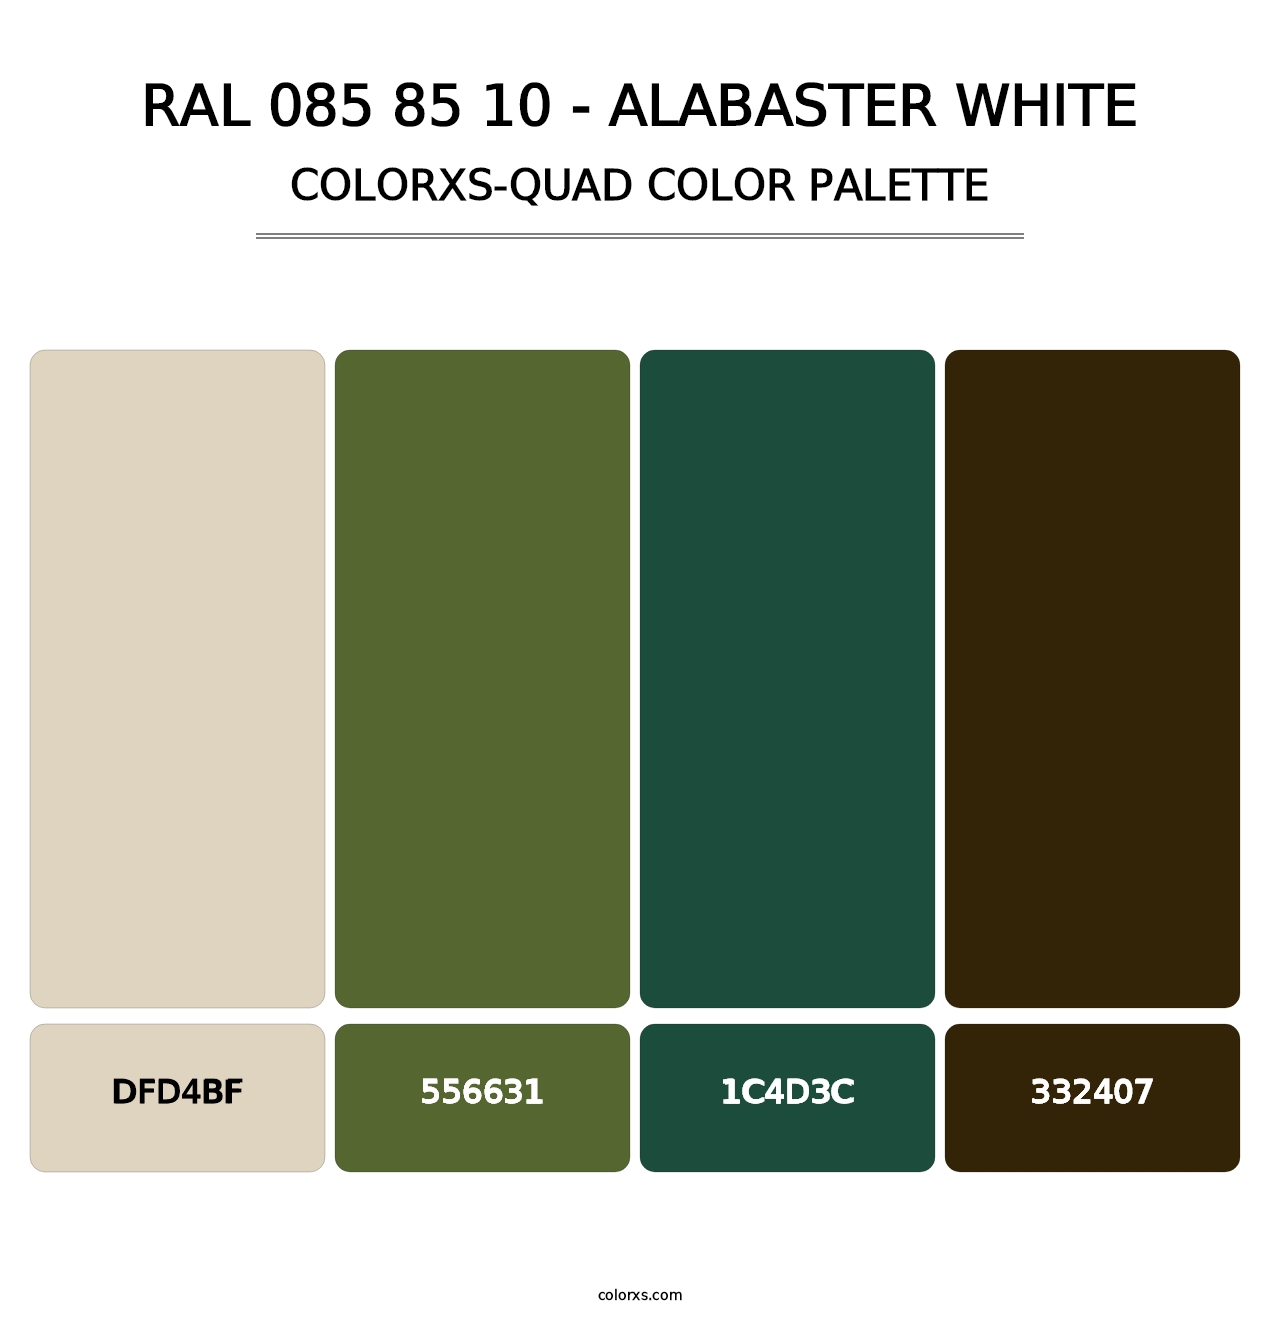 RAL 085 85 10 - Alabaster White - Colorxs Quad Palette